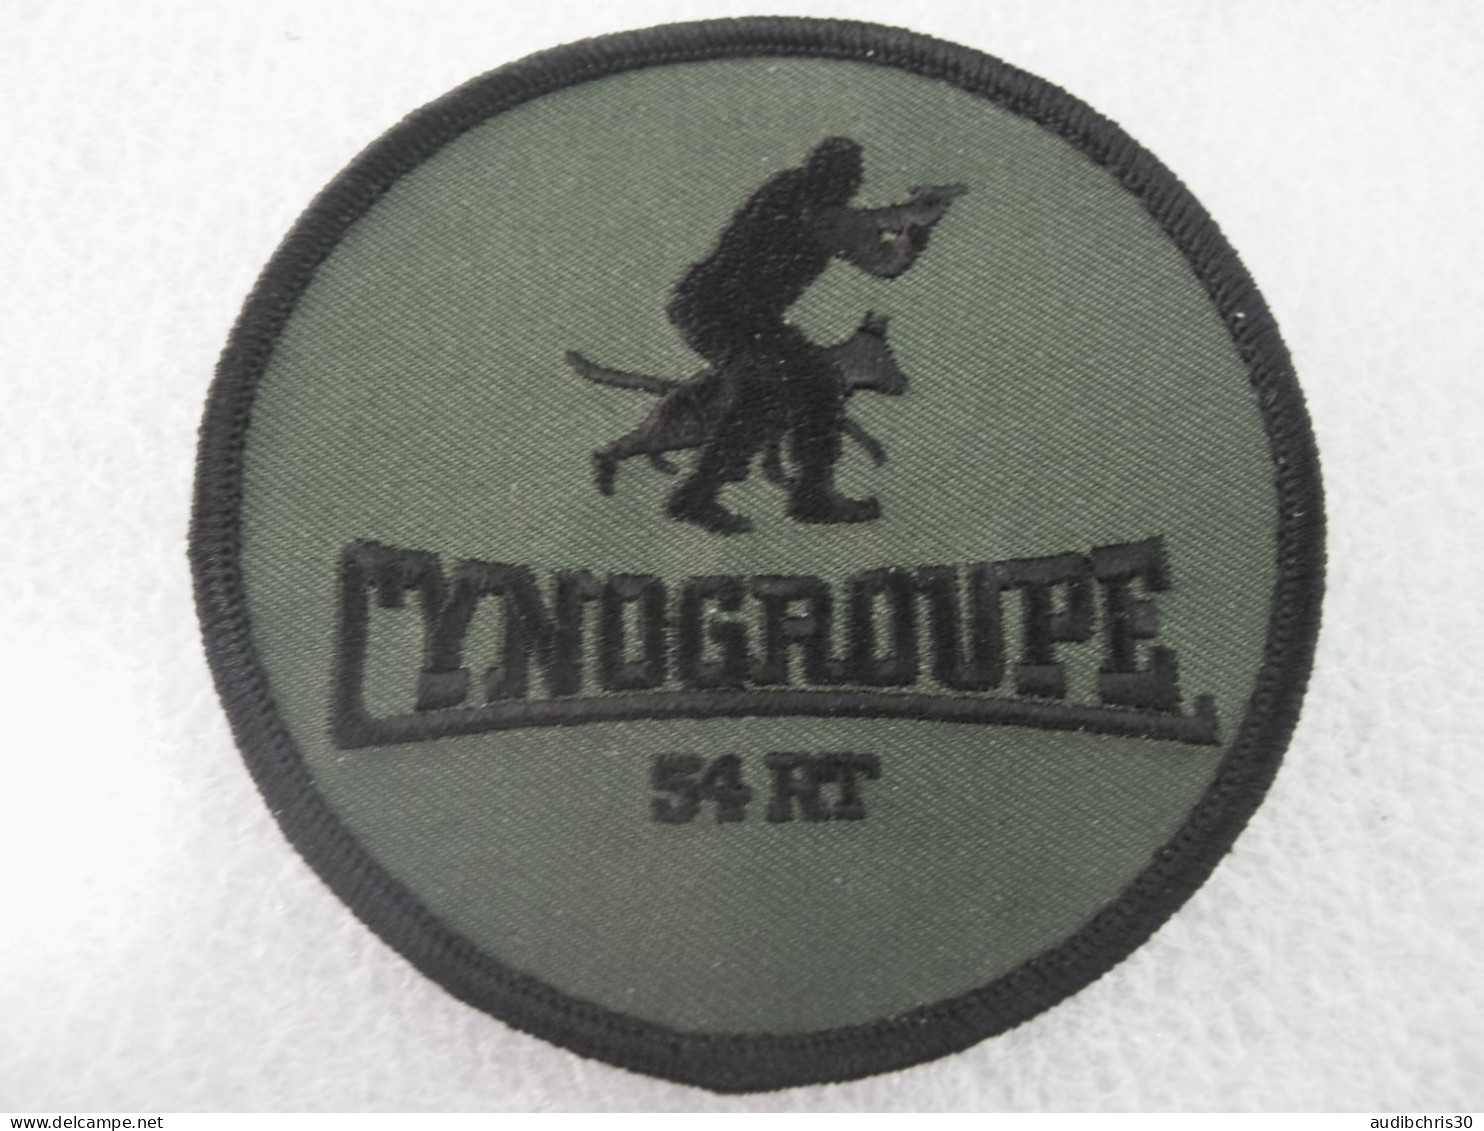 ECUSSON TRANSMISSIONS 54° RT LE GROUPE CYNOPHILE CYNOGROUPE OPEX SCRATCH 90MM - Armée De Terre